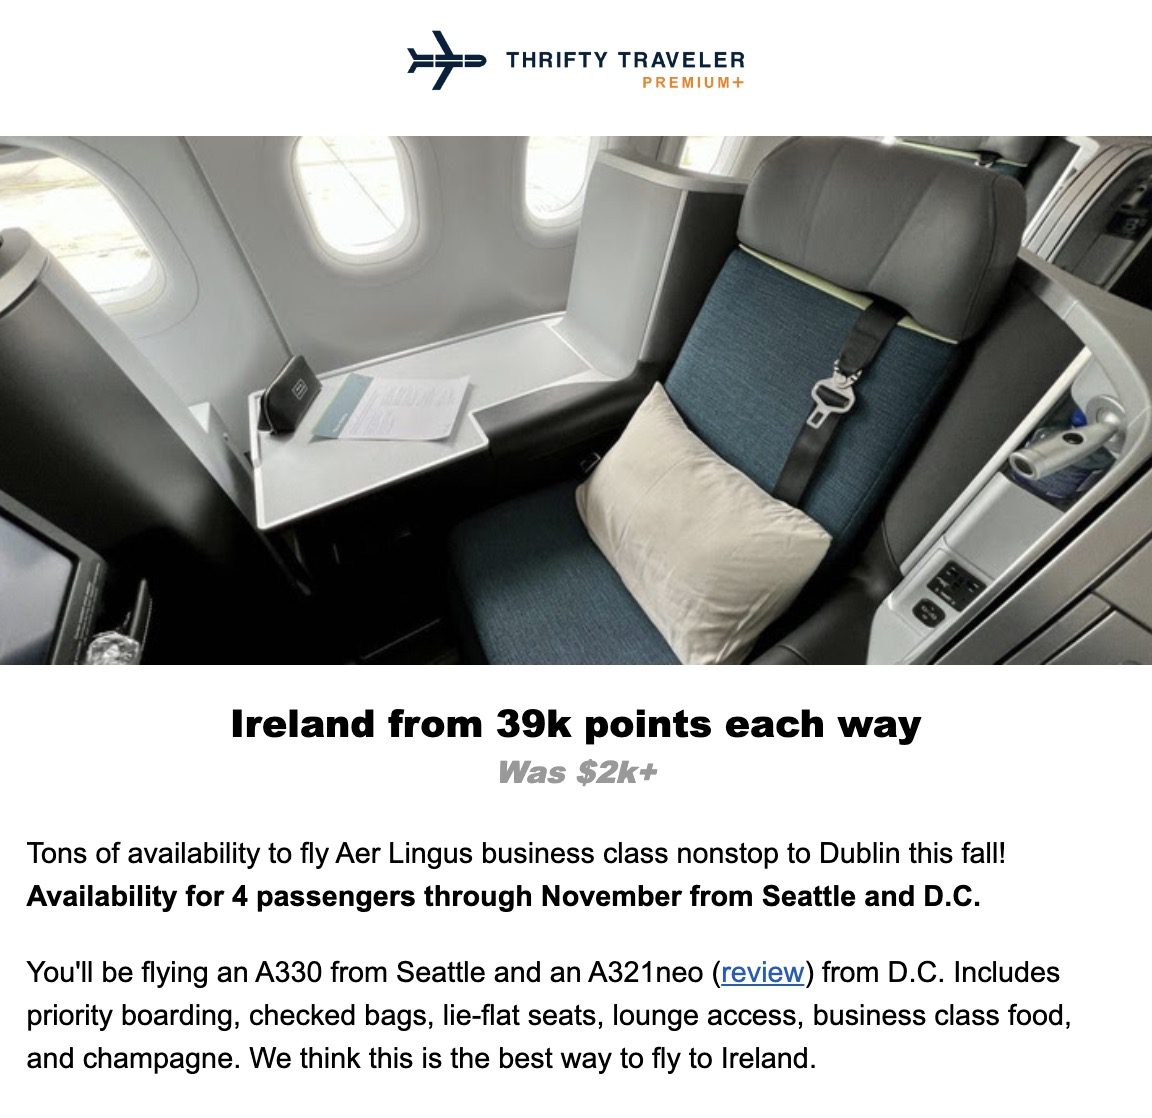 Aer Lingus business class